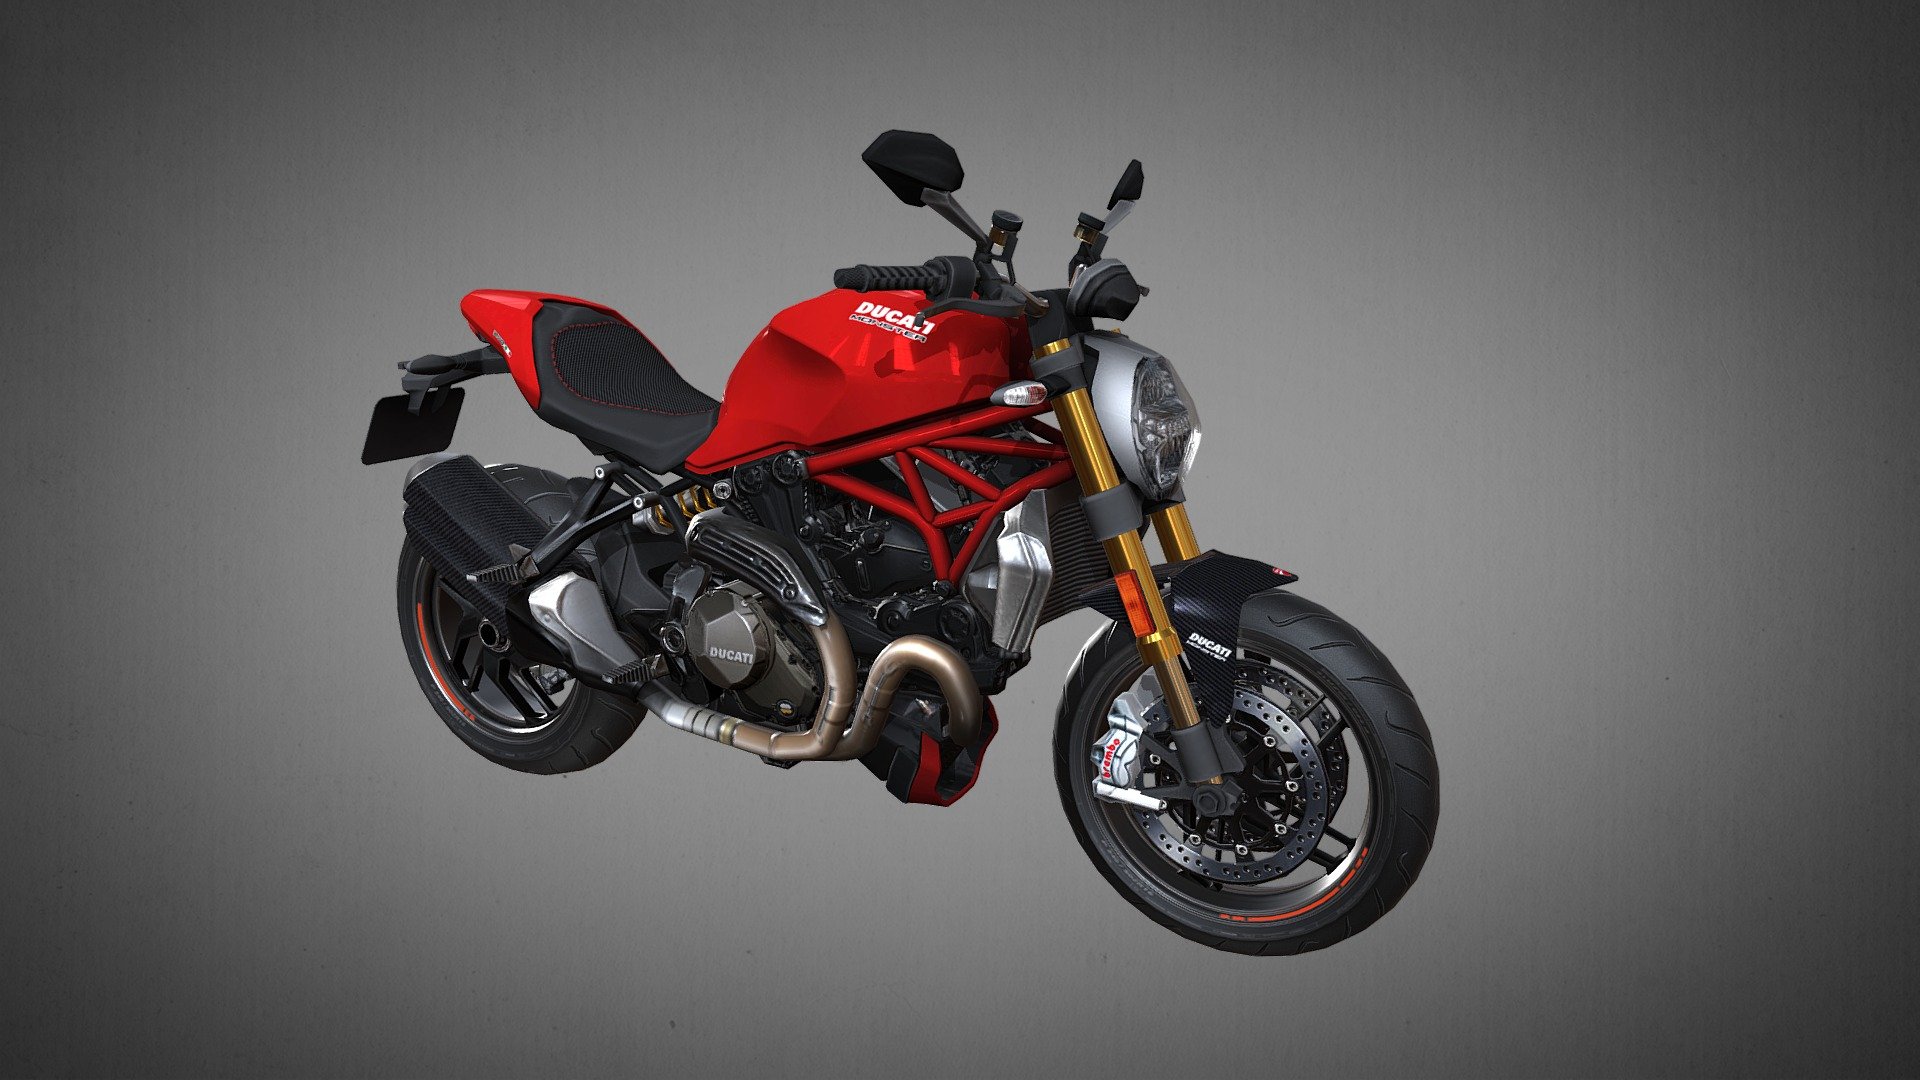 Low Res, Low poly version - Ducati Monster 1200, Low res - 3D model by Glenda Studio 3D Outsourcing (@glendastudio) 3d model